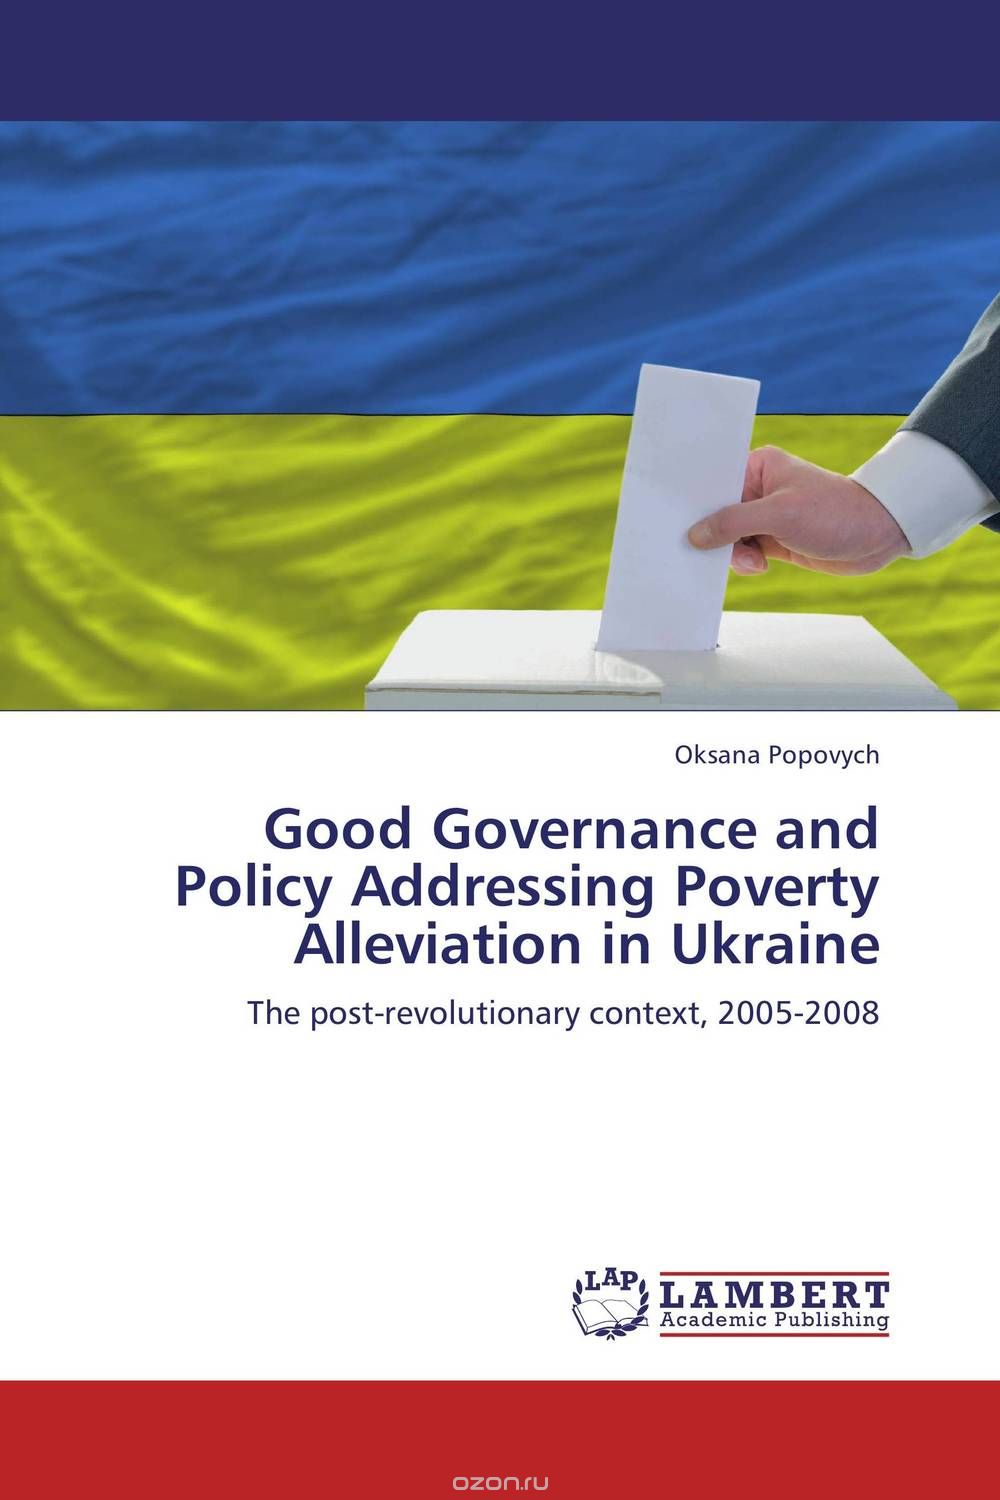 Скачать книгу "Good Governance and Policy Addressing Poverty Alleviation in Ukraine"